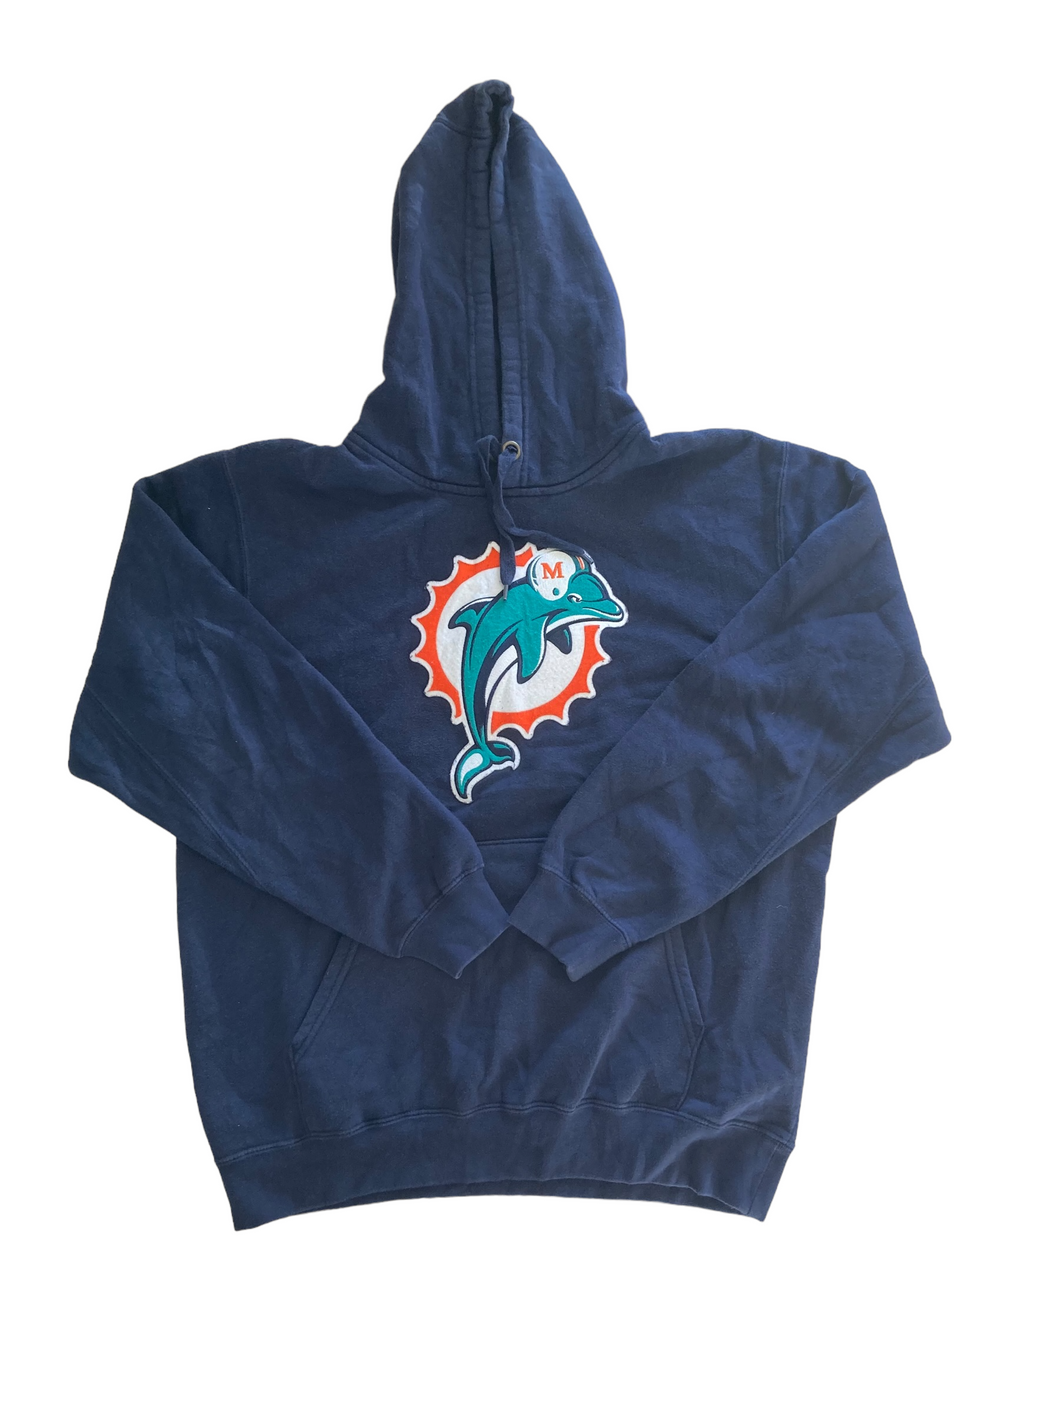 miami dolphins NFL team hoodie 